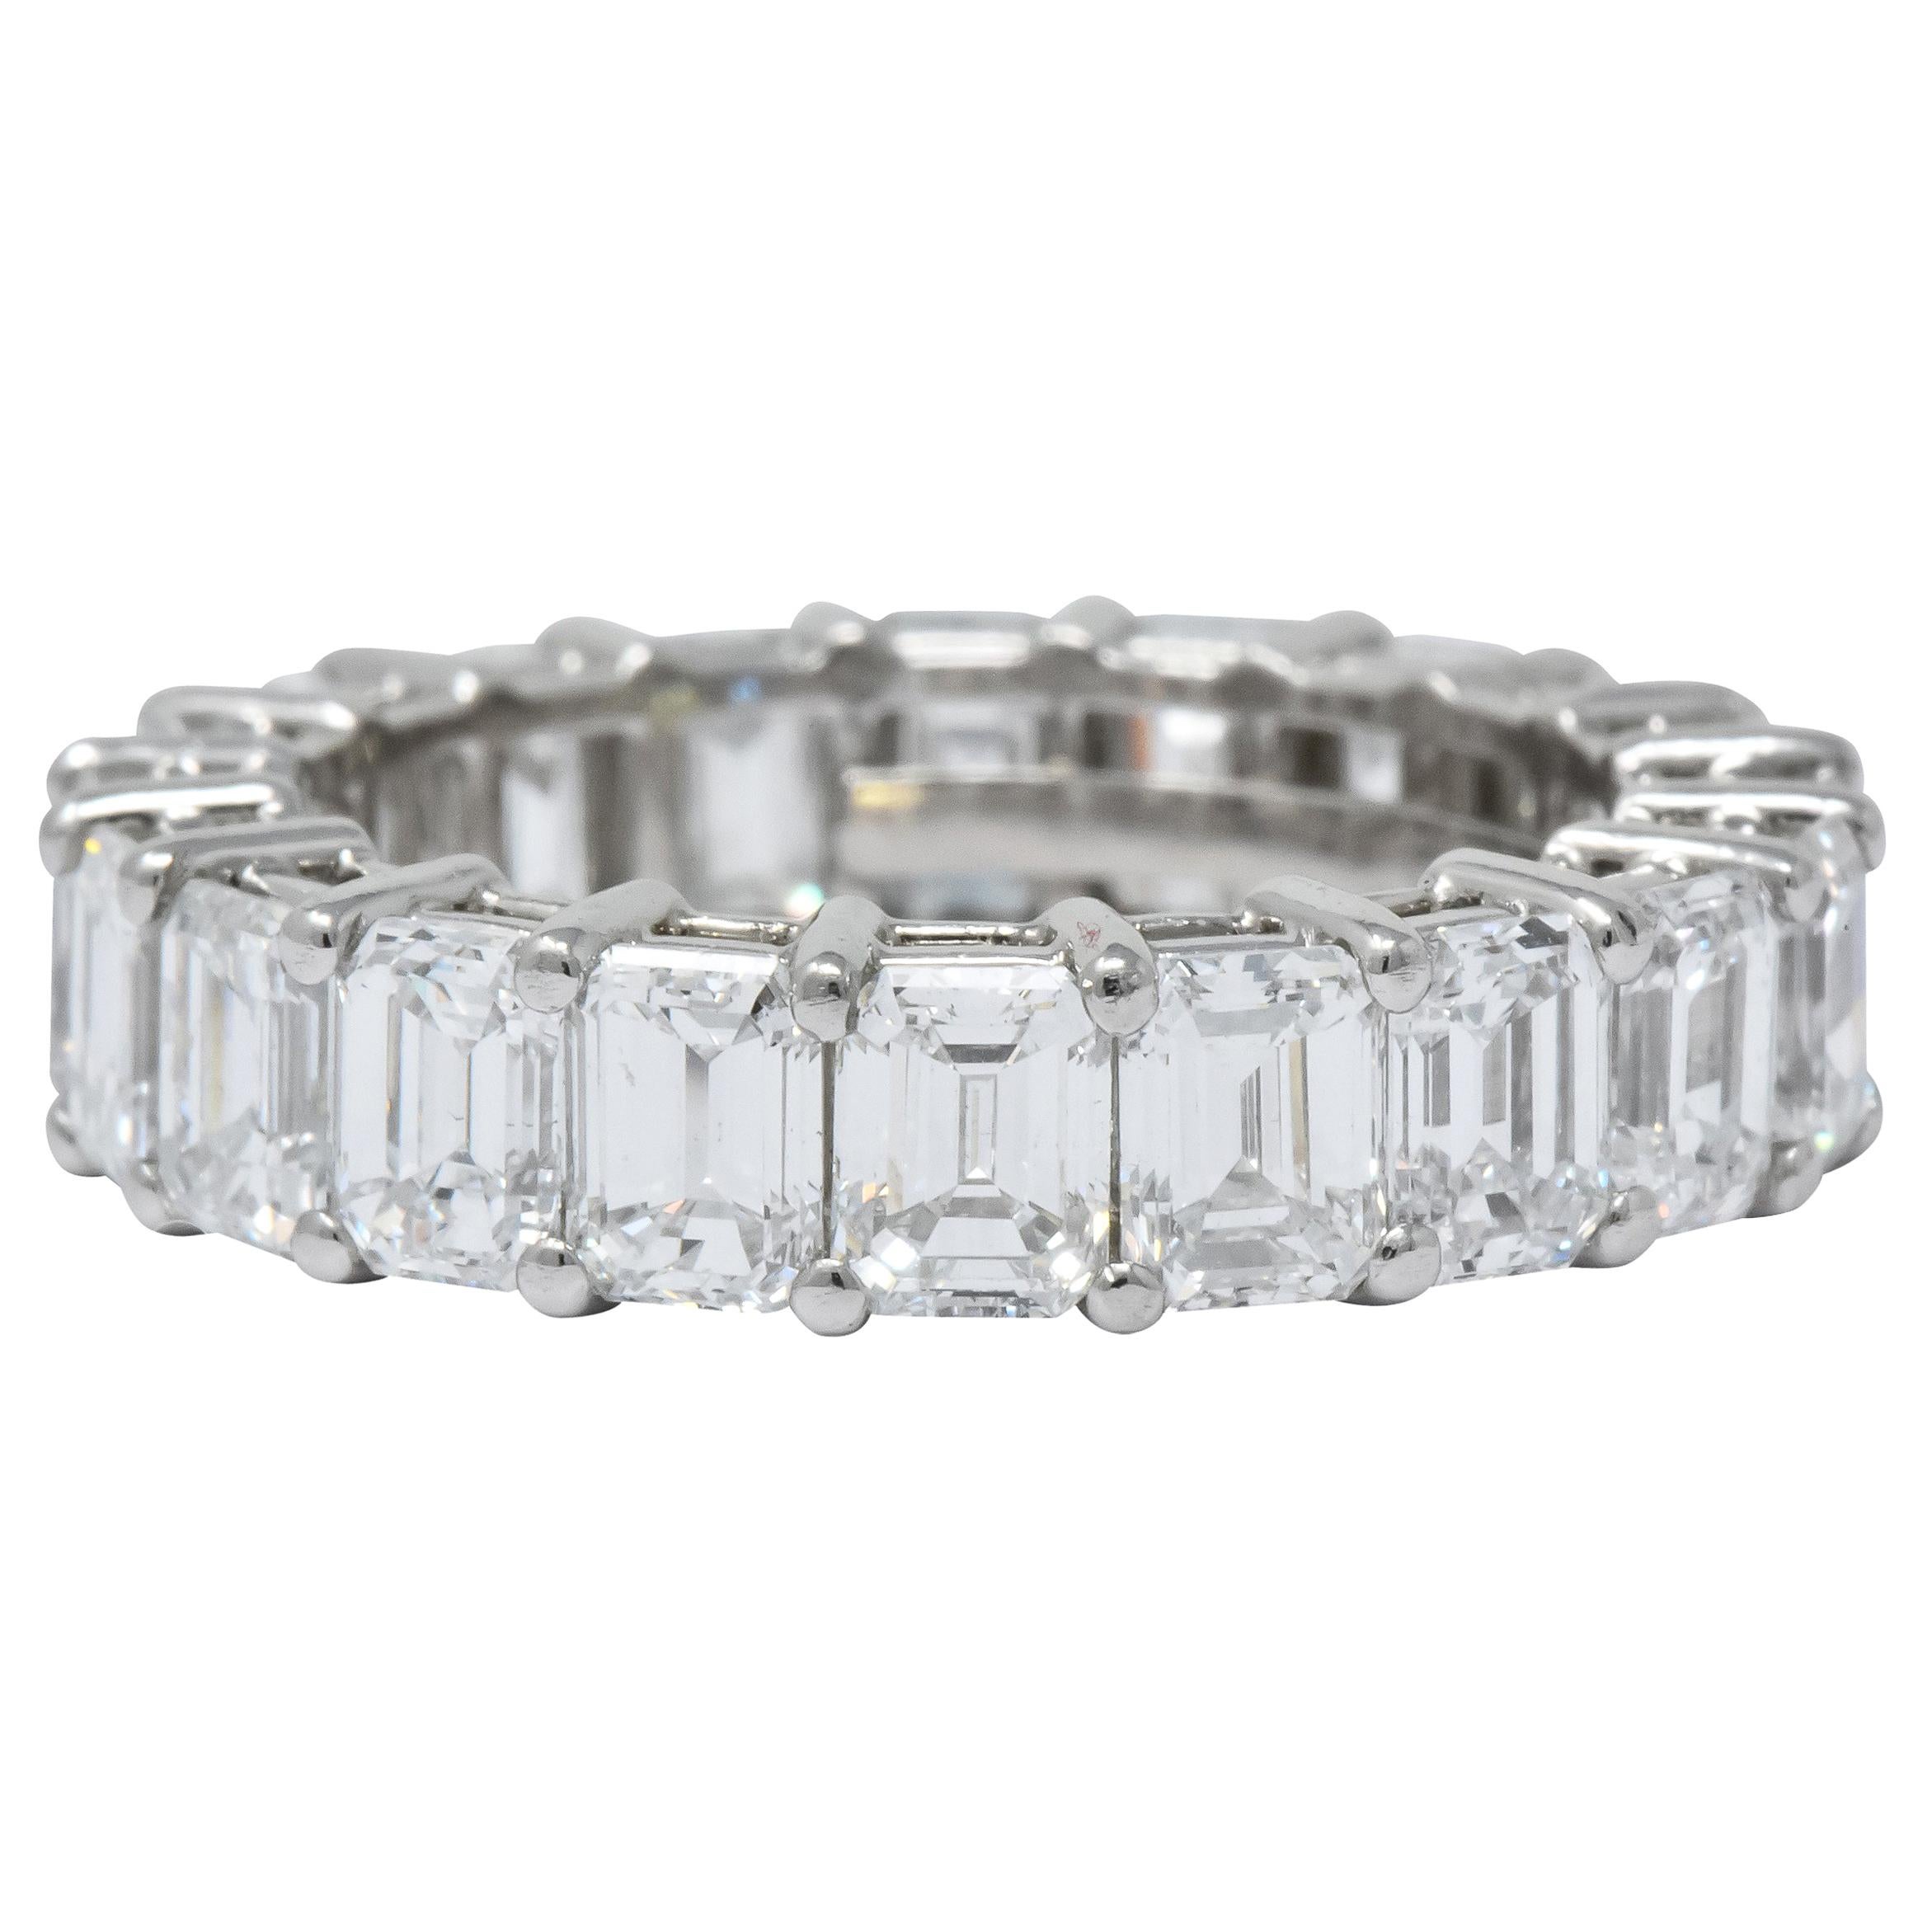 Tiffany & Co. 7.50 Carat Diamond Platinum Eternity Band Ring